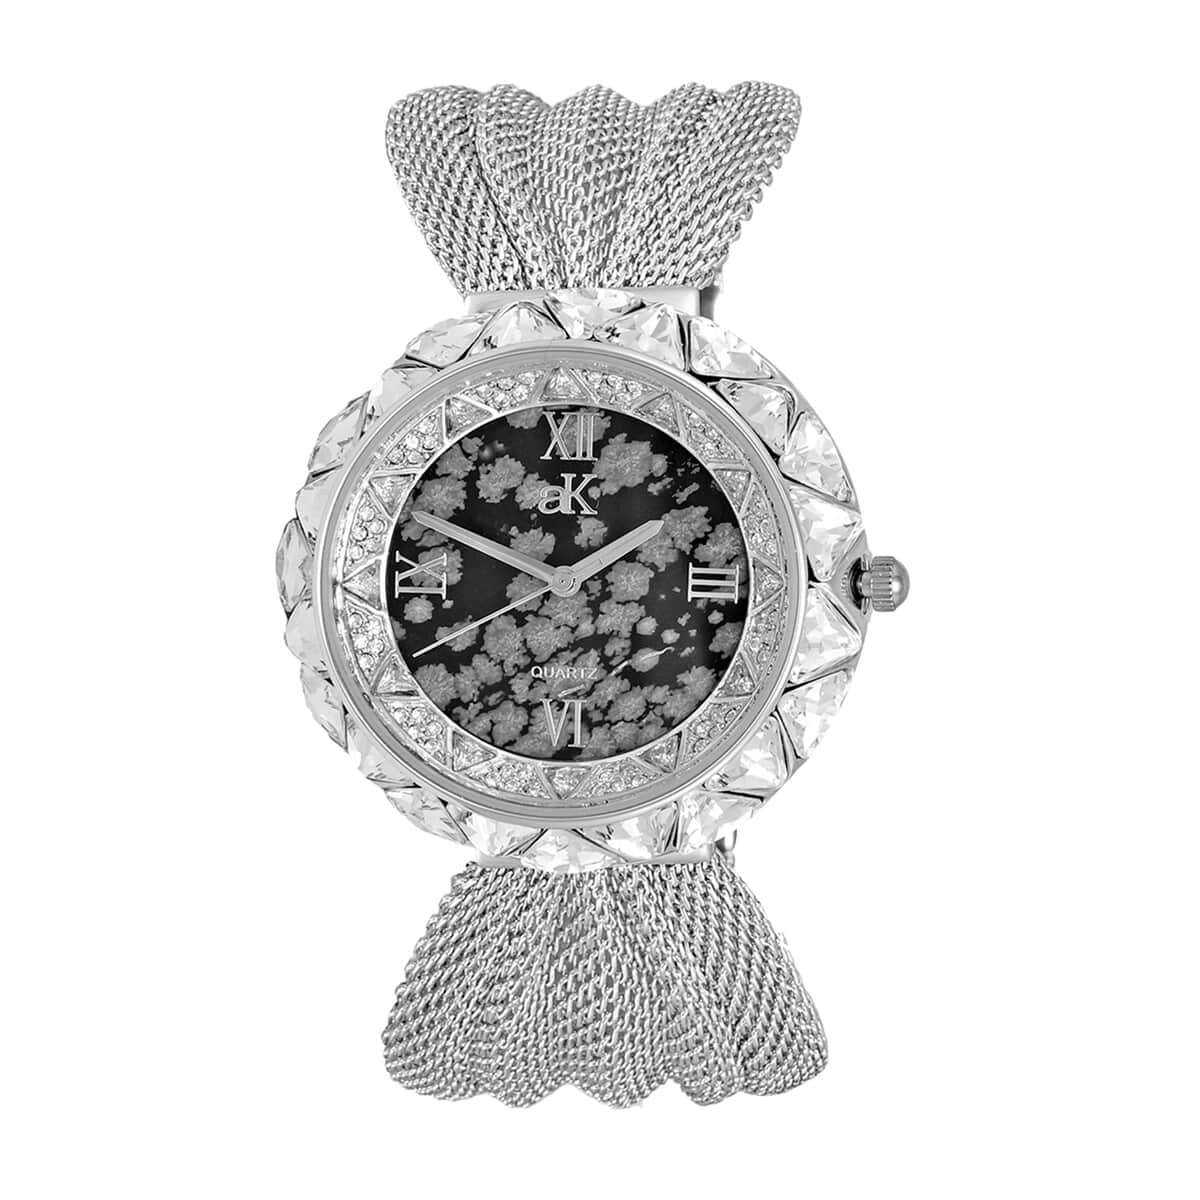 ADEE KAYE Austrian Crystal Japan Quartz Movement Black Dial Watch in Silvertone Strap (40.9 mm) | Women's Designer Watch | Analog Luxury Wristwatch image number 0